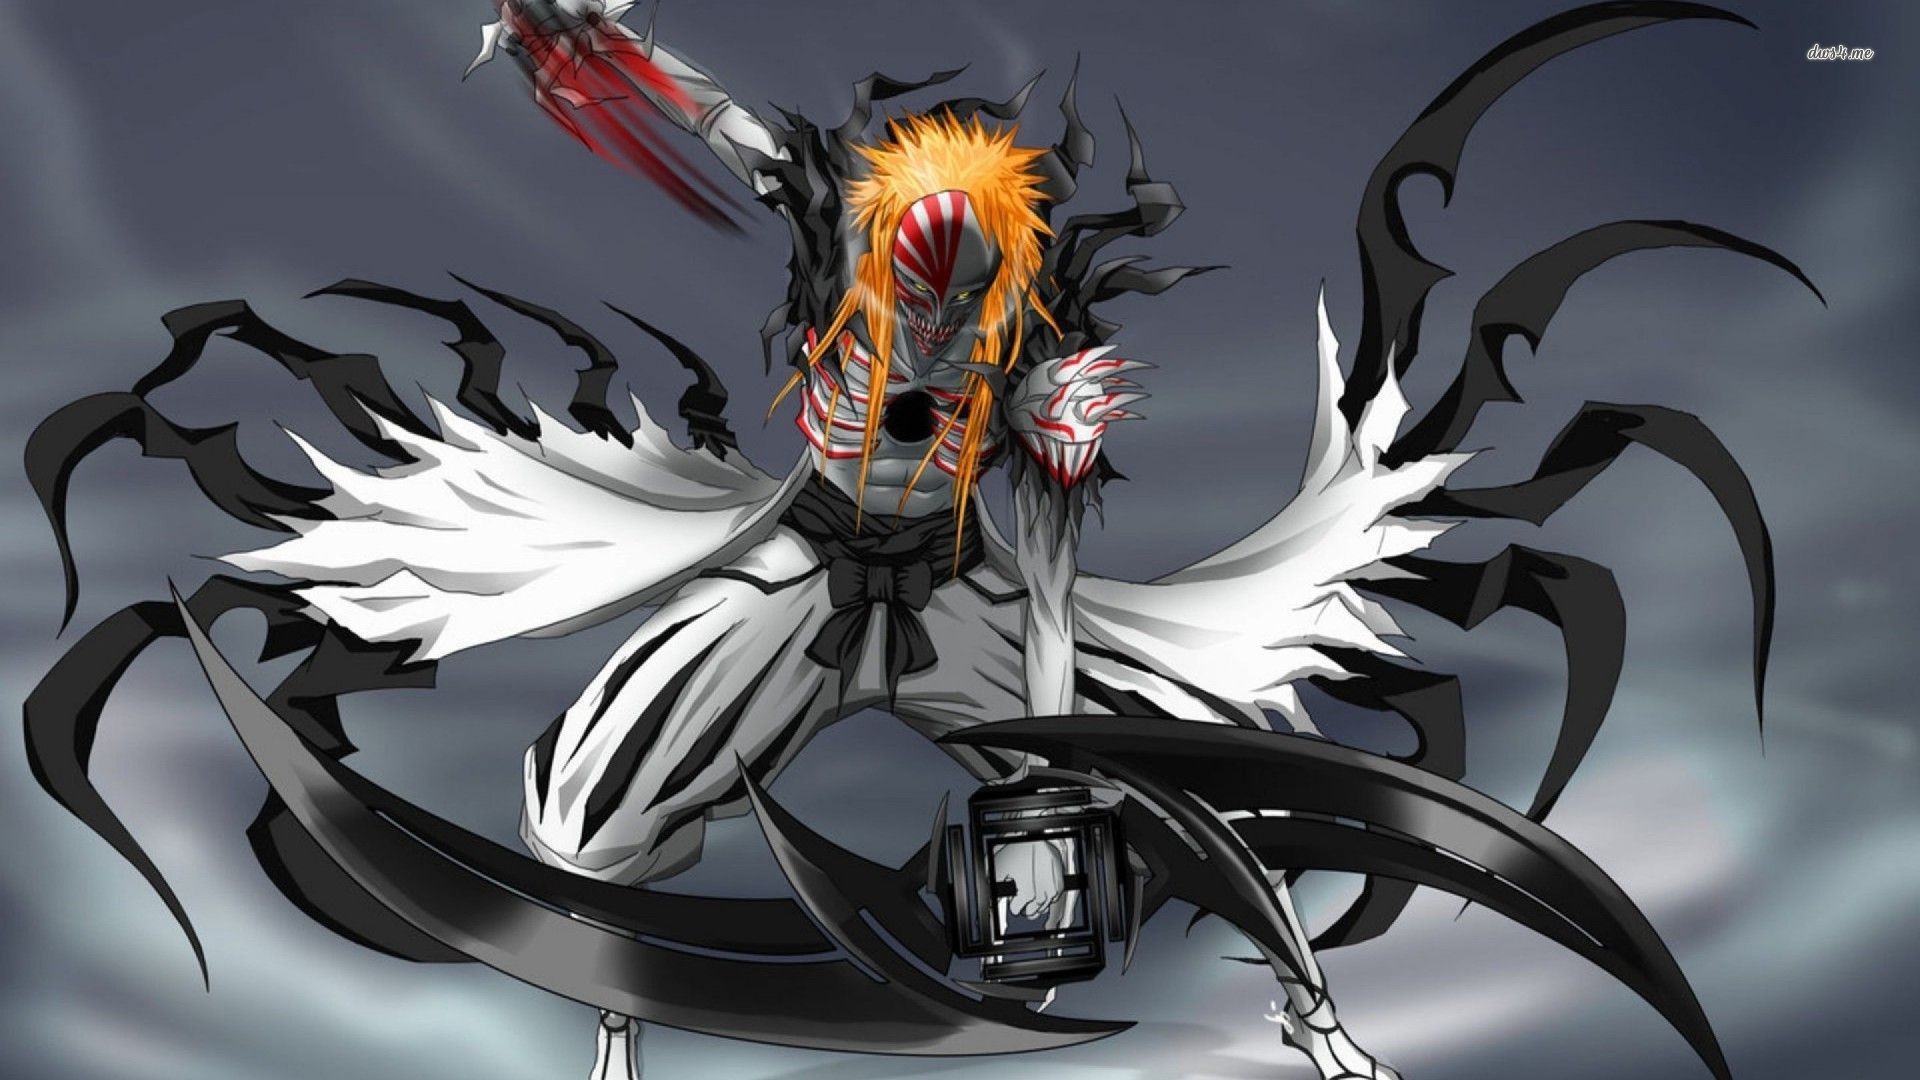 ichigo wallpaper,cg artwork,dragon,fictional character,wing,mythical creature